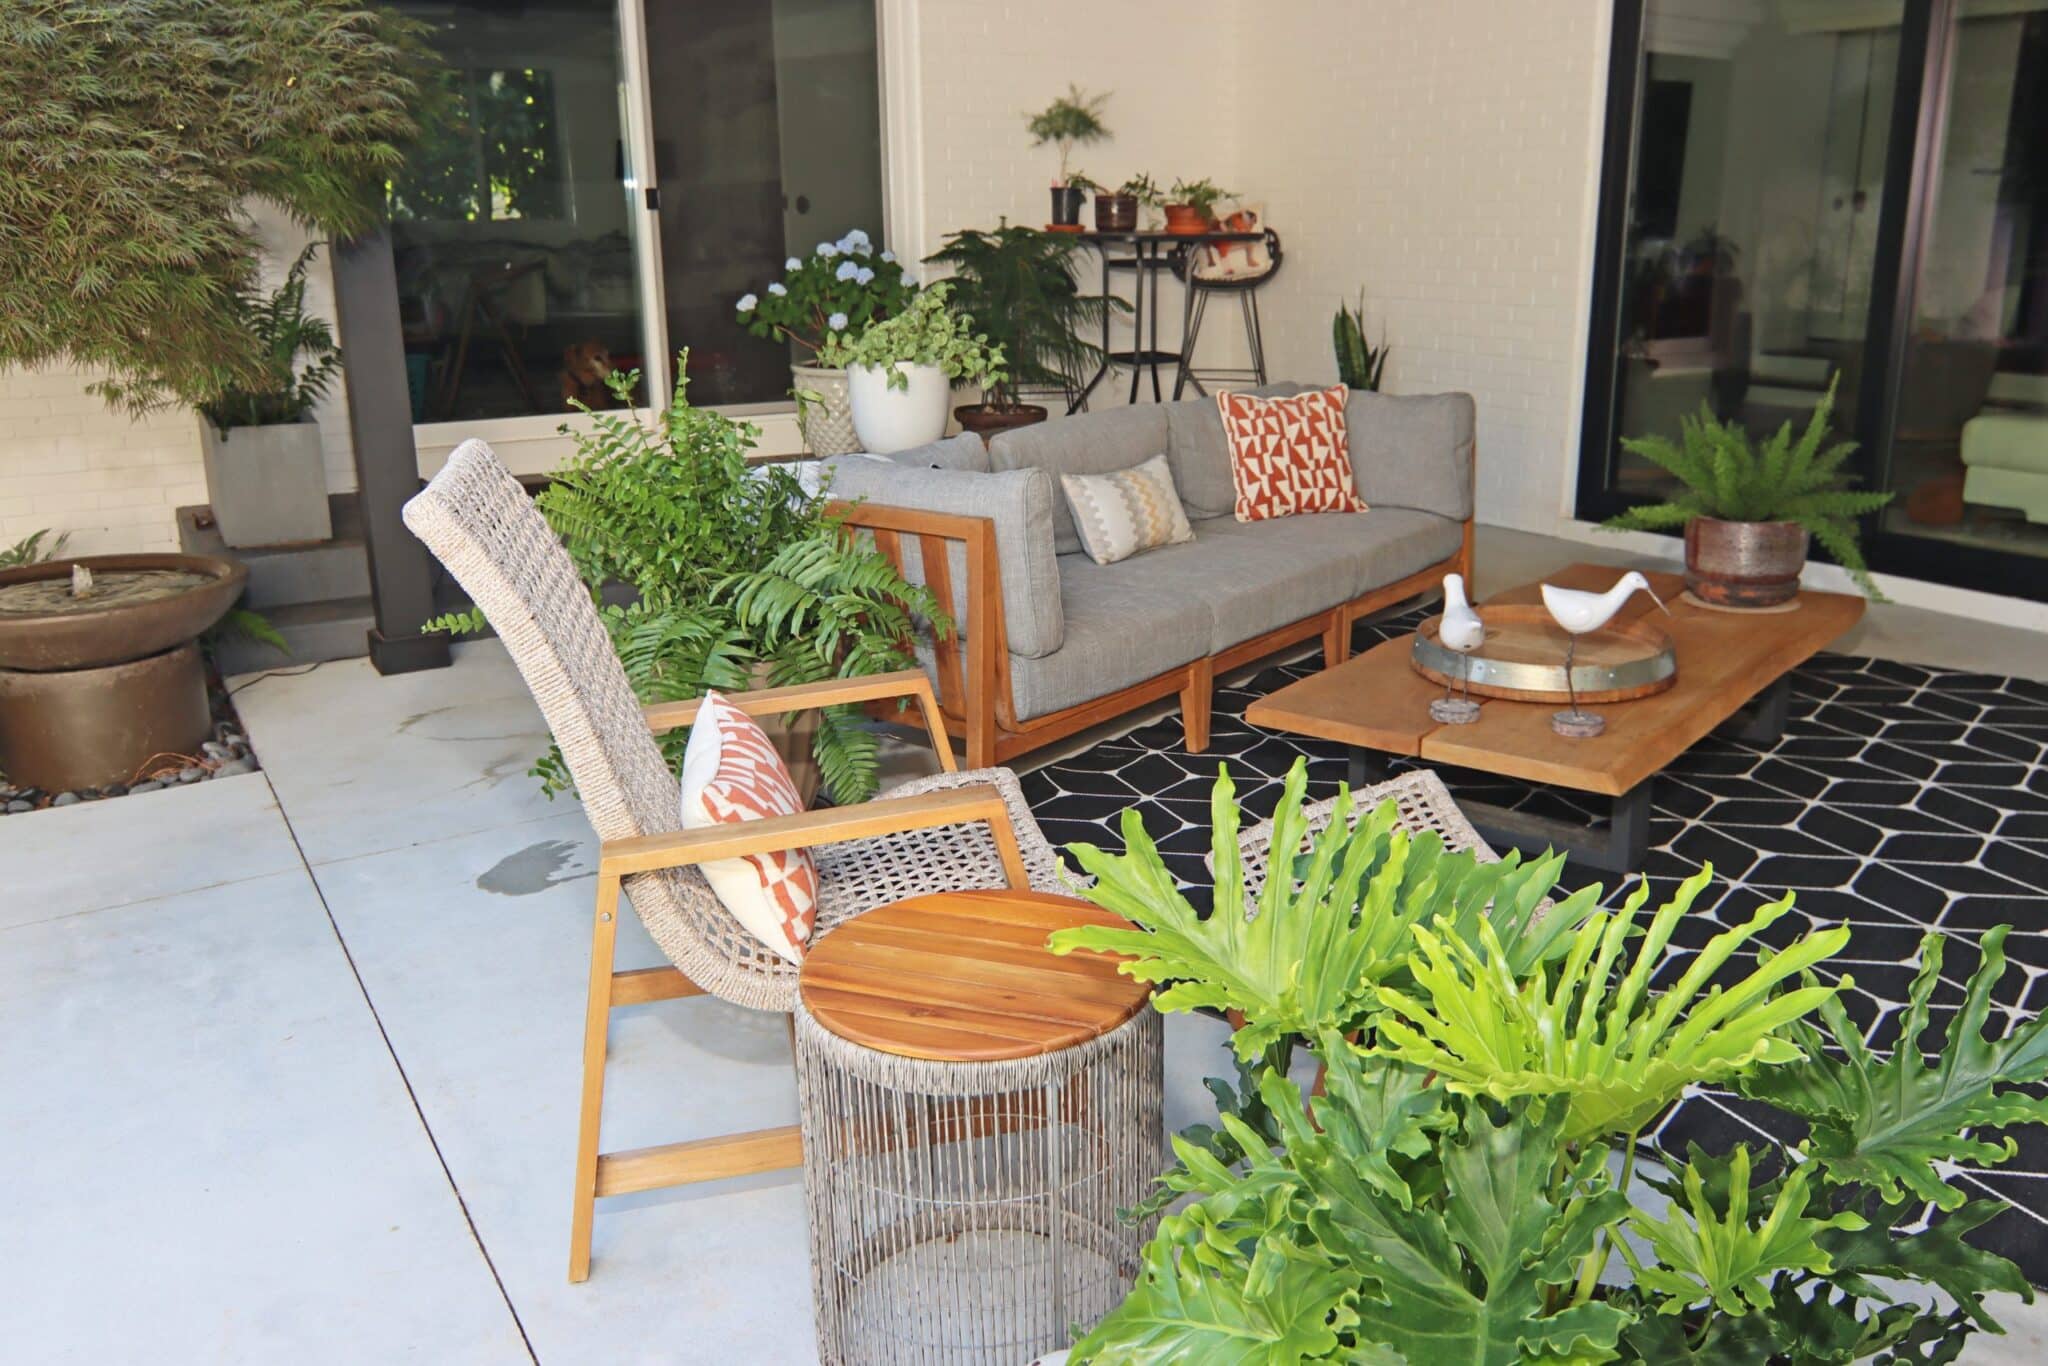 Midcentury modern backyard patio seating area with patio furniture